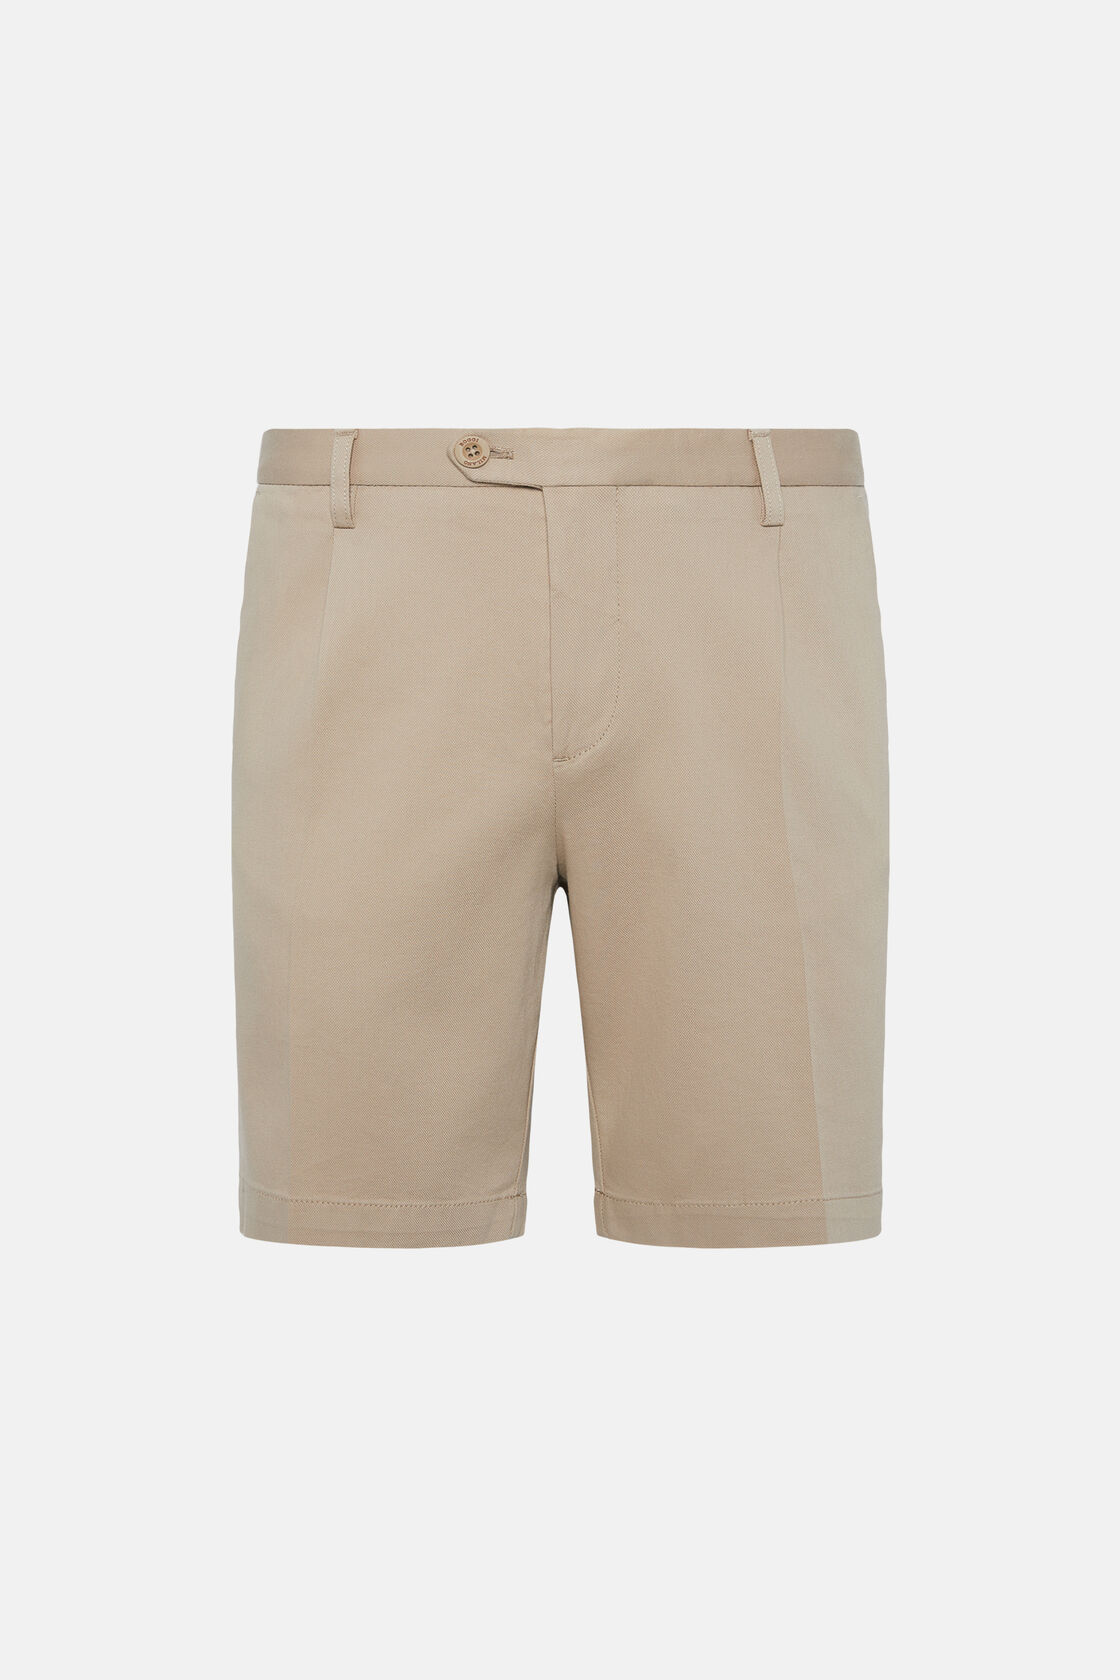 Stretch Cotton and Tencel Bermuda Shorts, Beige, hi-res